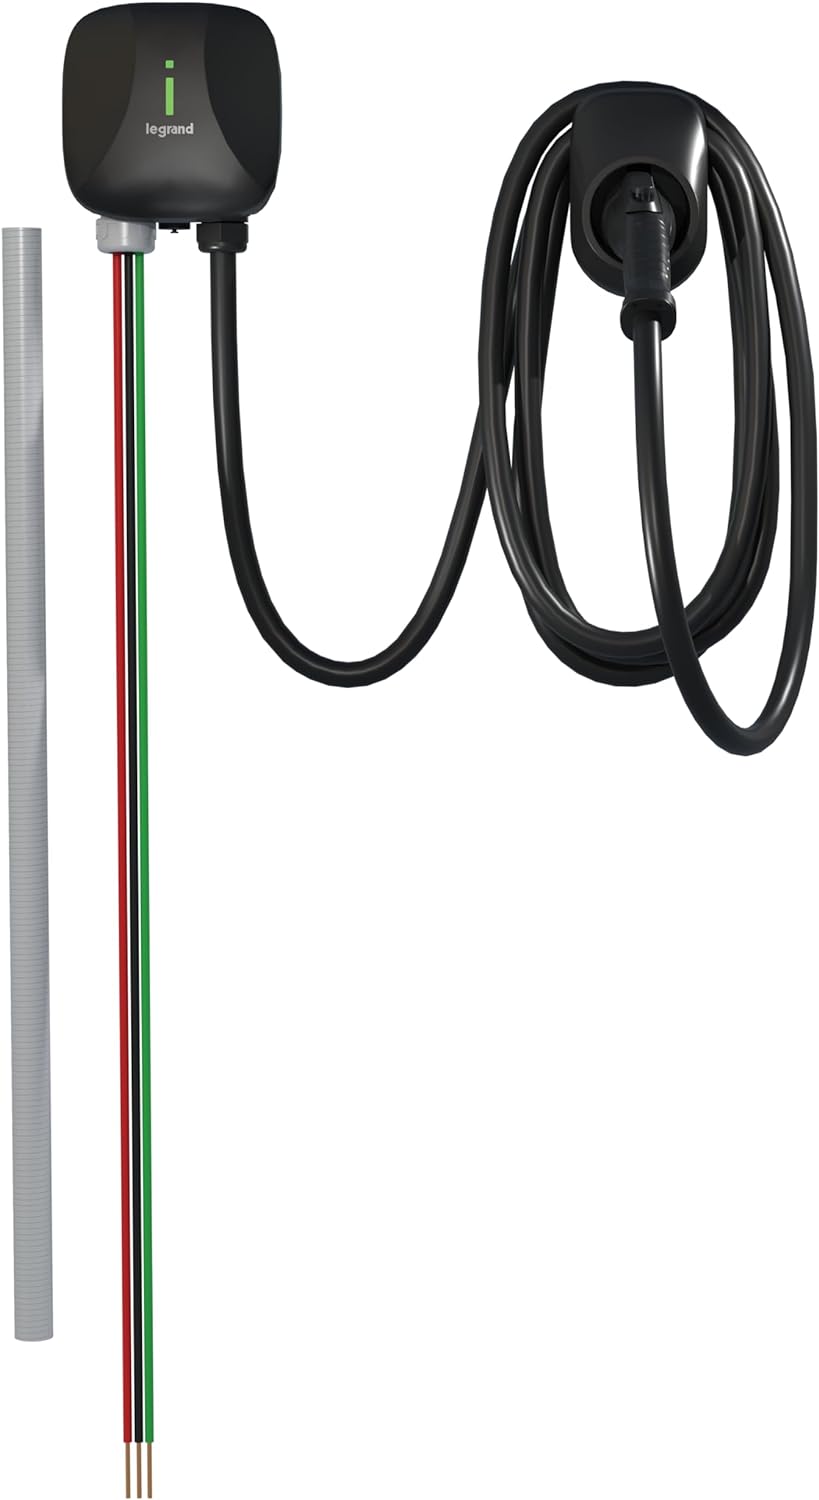 Pass & Seymour Cargador eléctrico de nivel 2 cableado, 48 amperios, estación de carga de automóvil para interiores y exteriores, cable de carga de coche eléctrico de 18 pies, negro - L2EVSE48AC